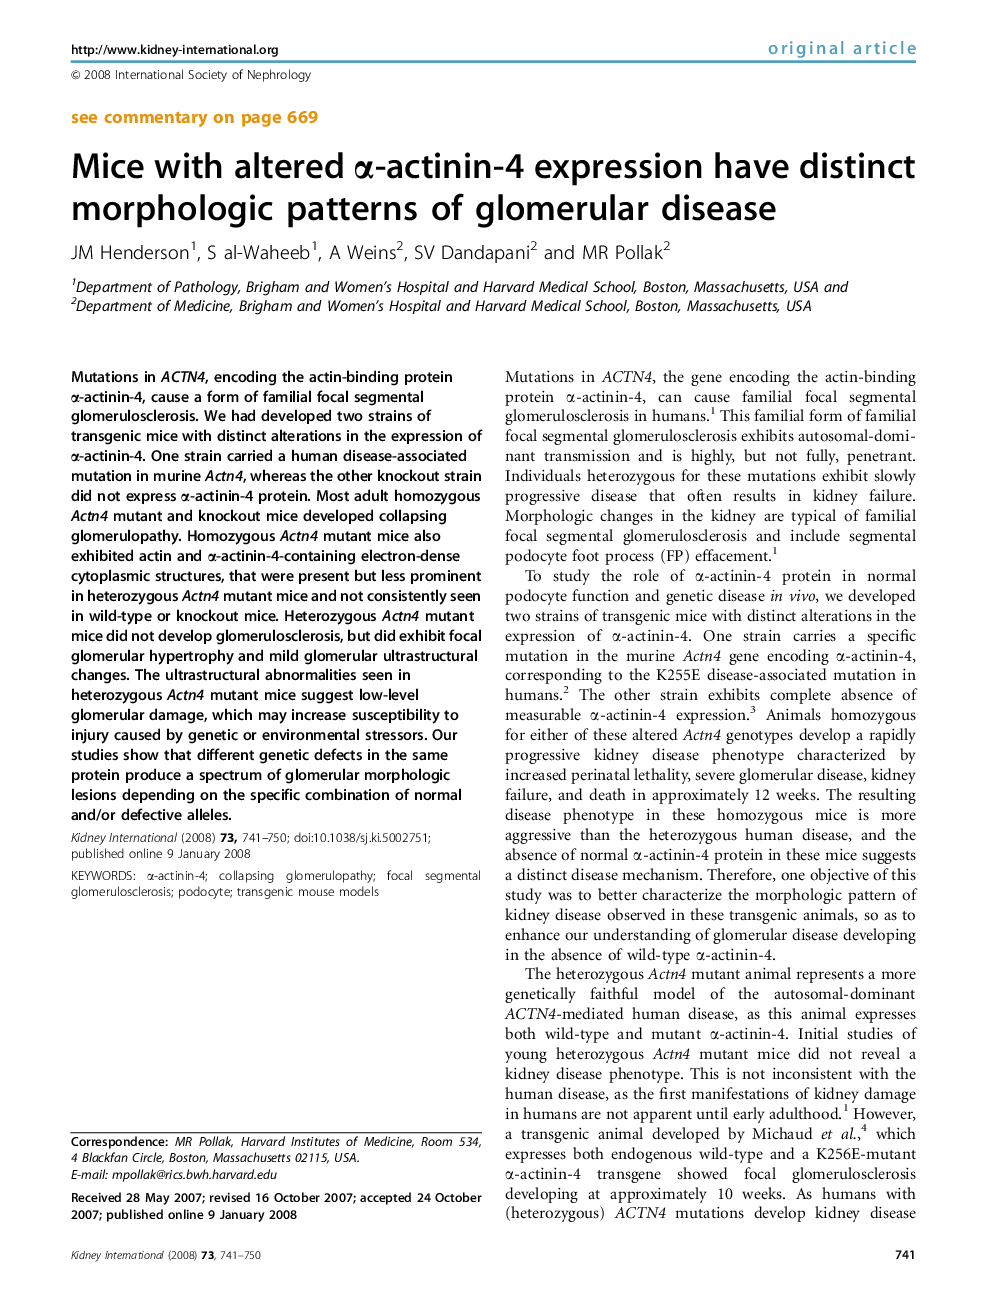 Mice with altered α-actinin-4 expression have distinct morphologic patterns of glomerular disease